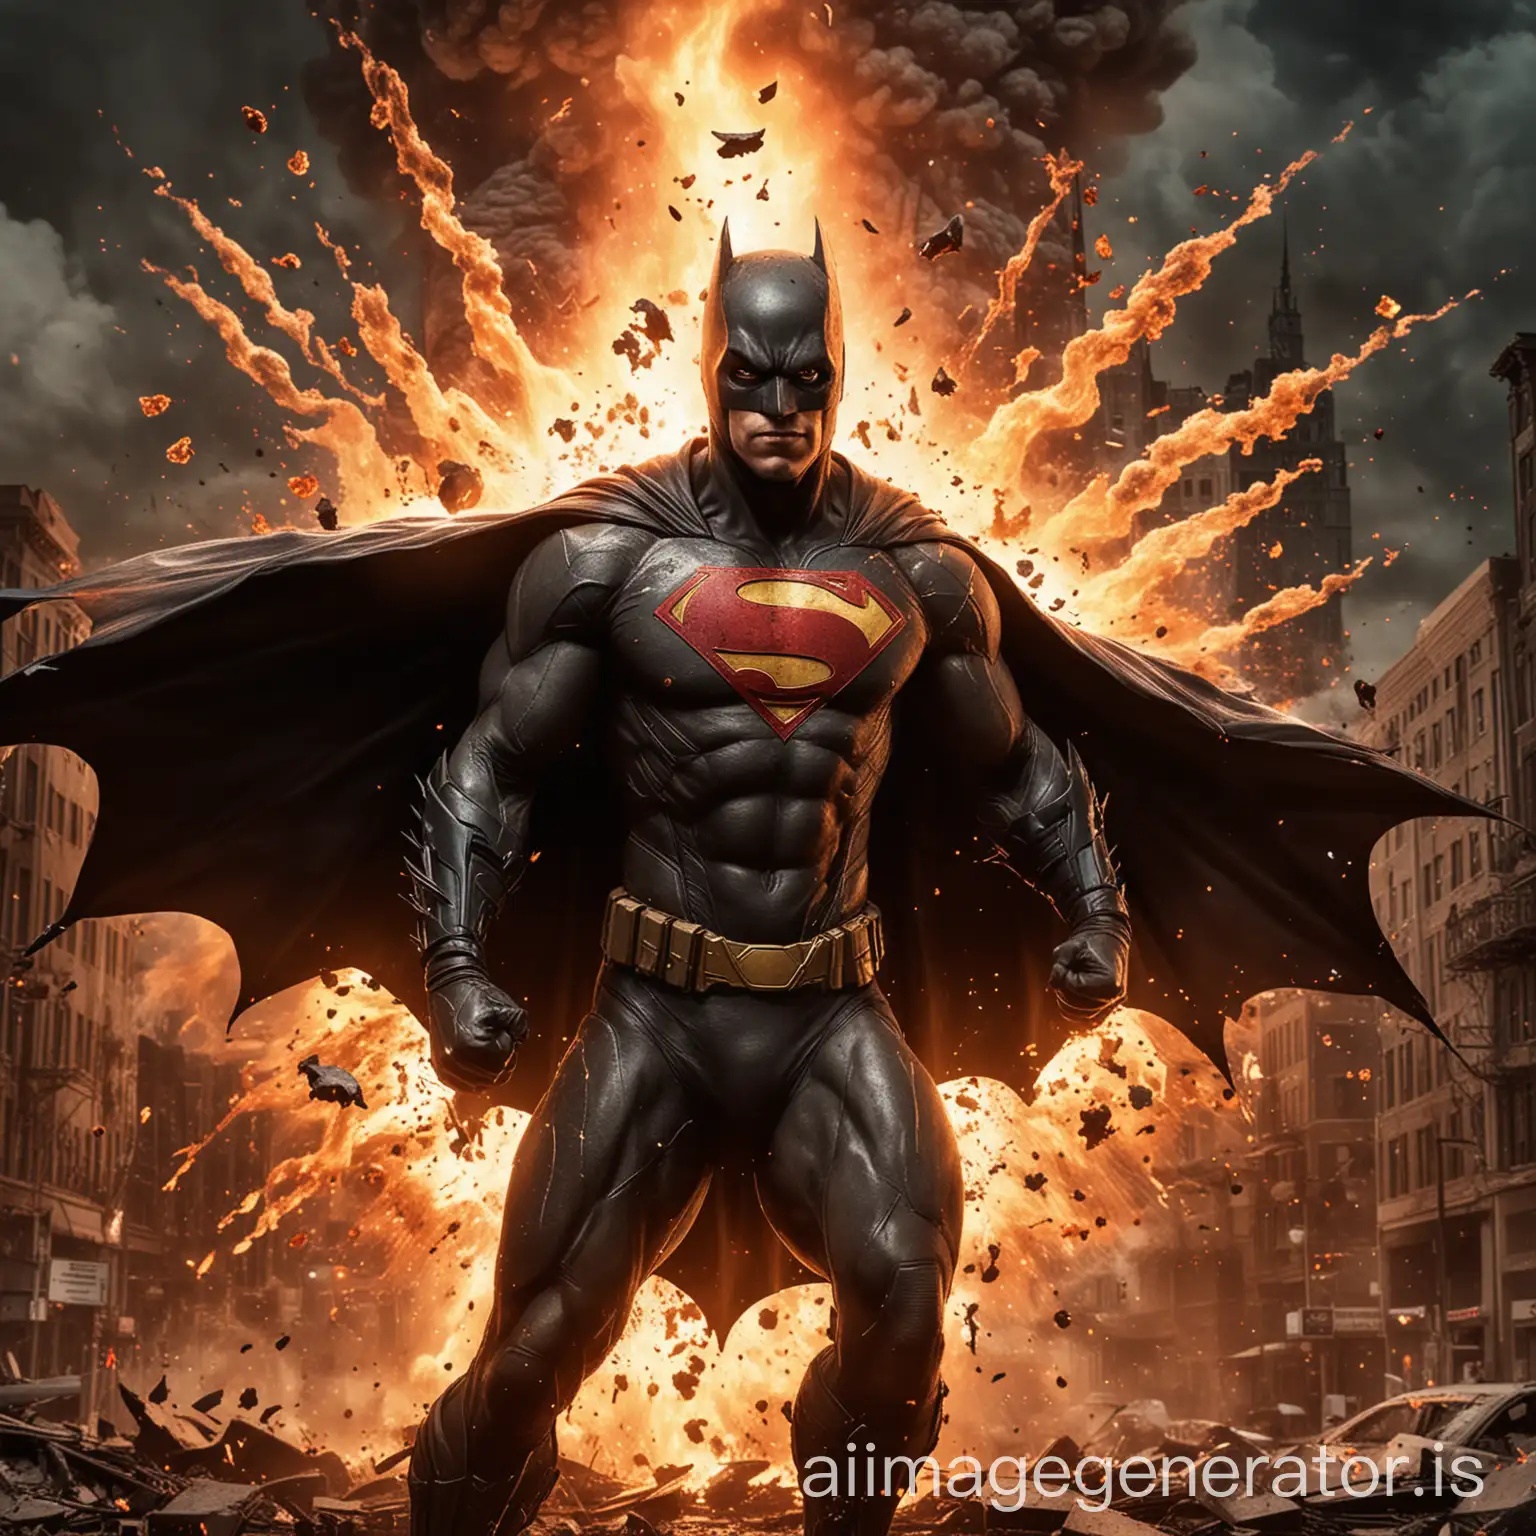 Superheroes-Batman-and-Superman-in-Explosive-Action-Scene